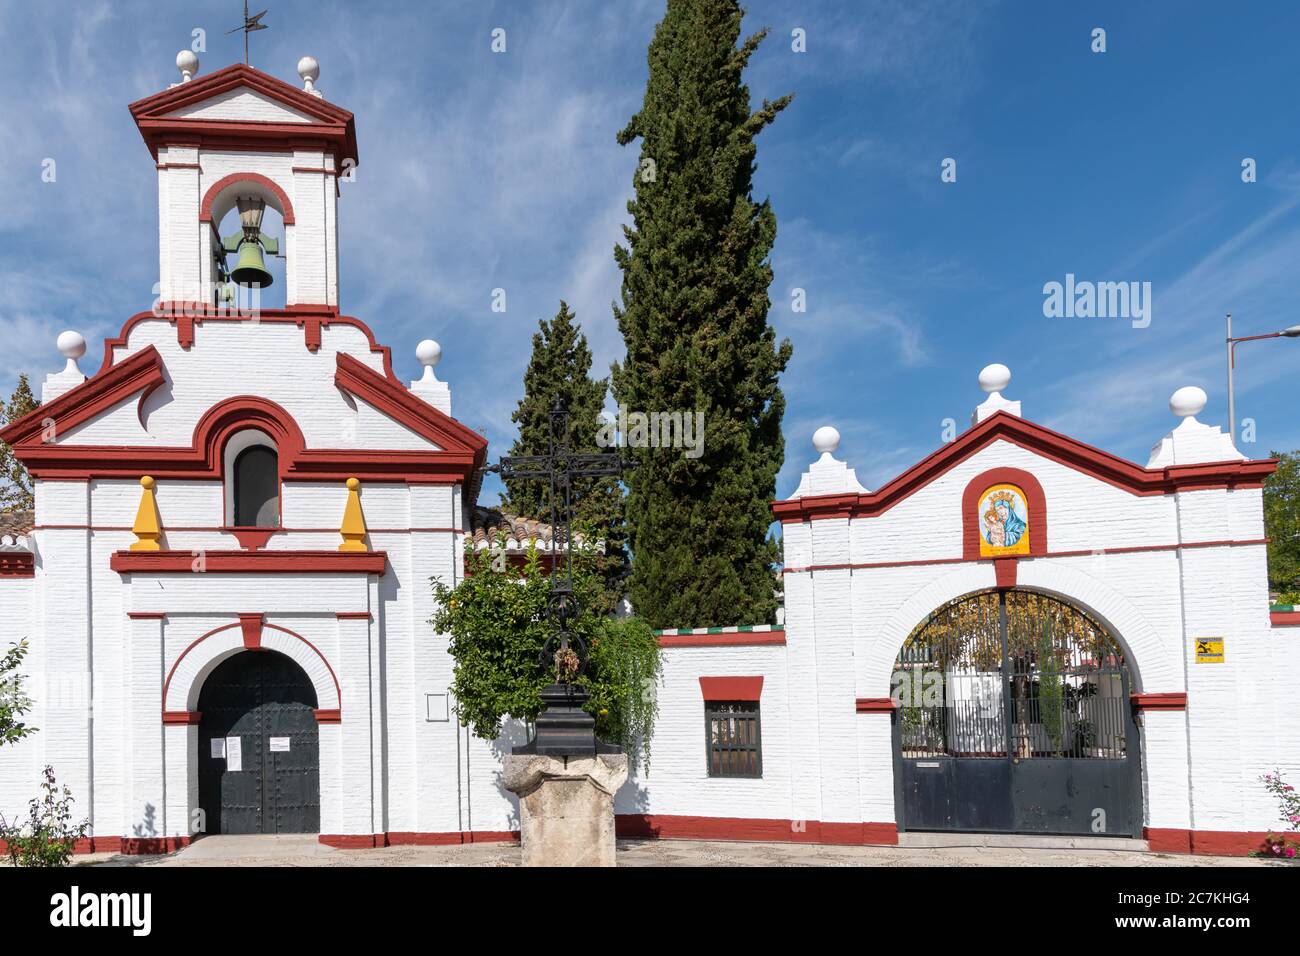 Fachada de iglesia simple fotografías e imágenes de alta resolución - Alamy